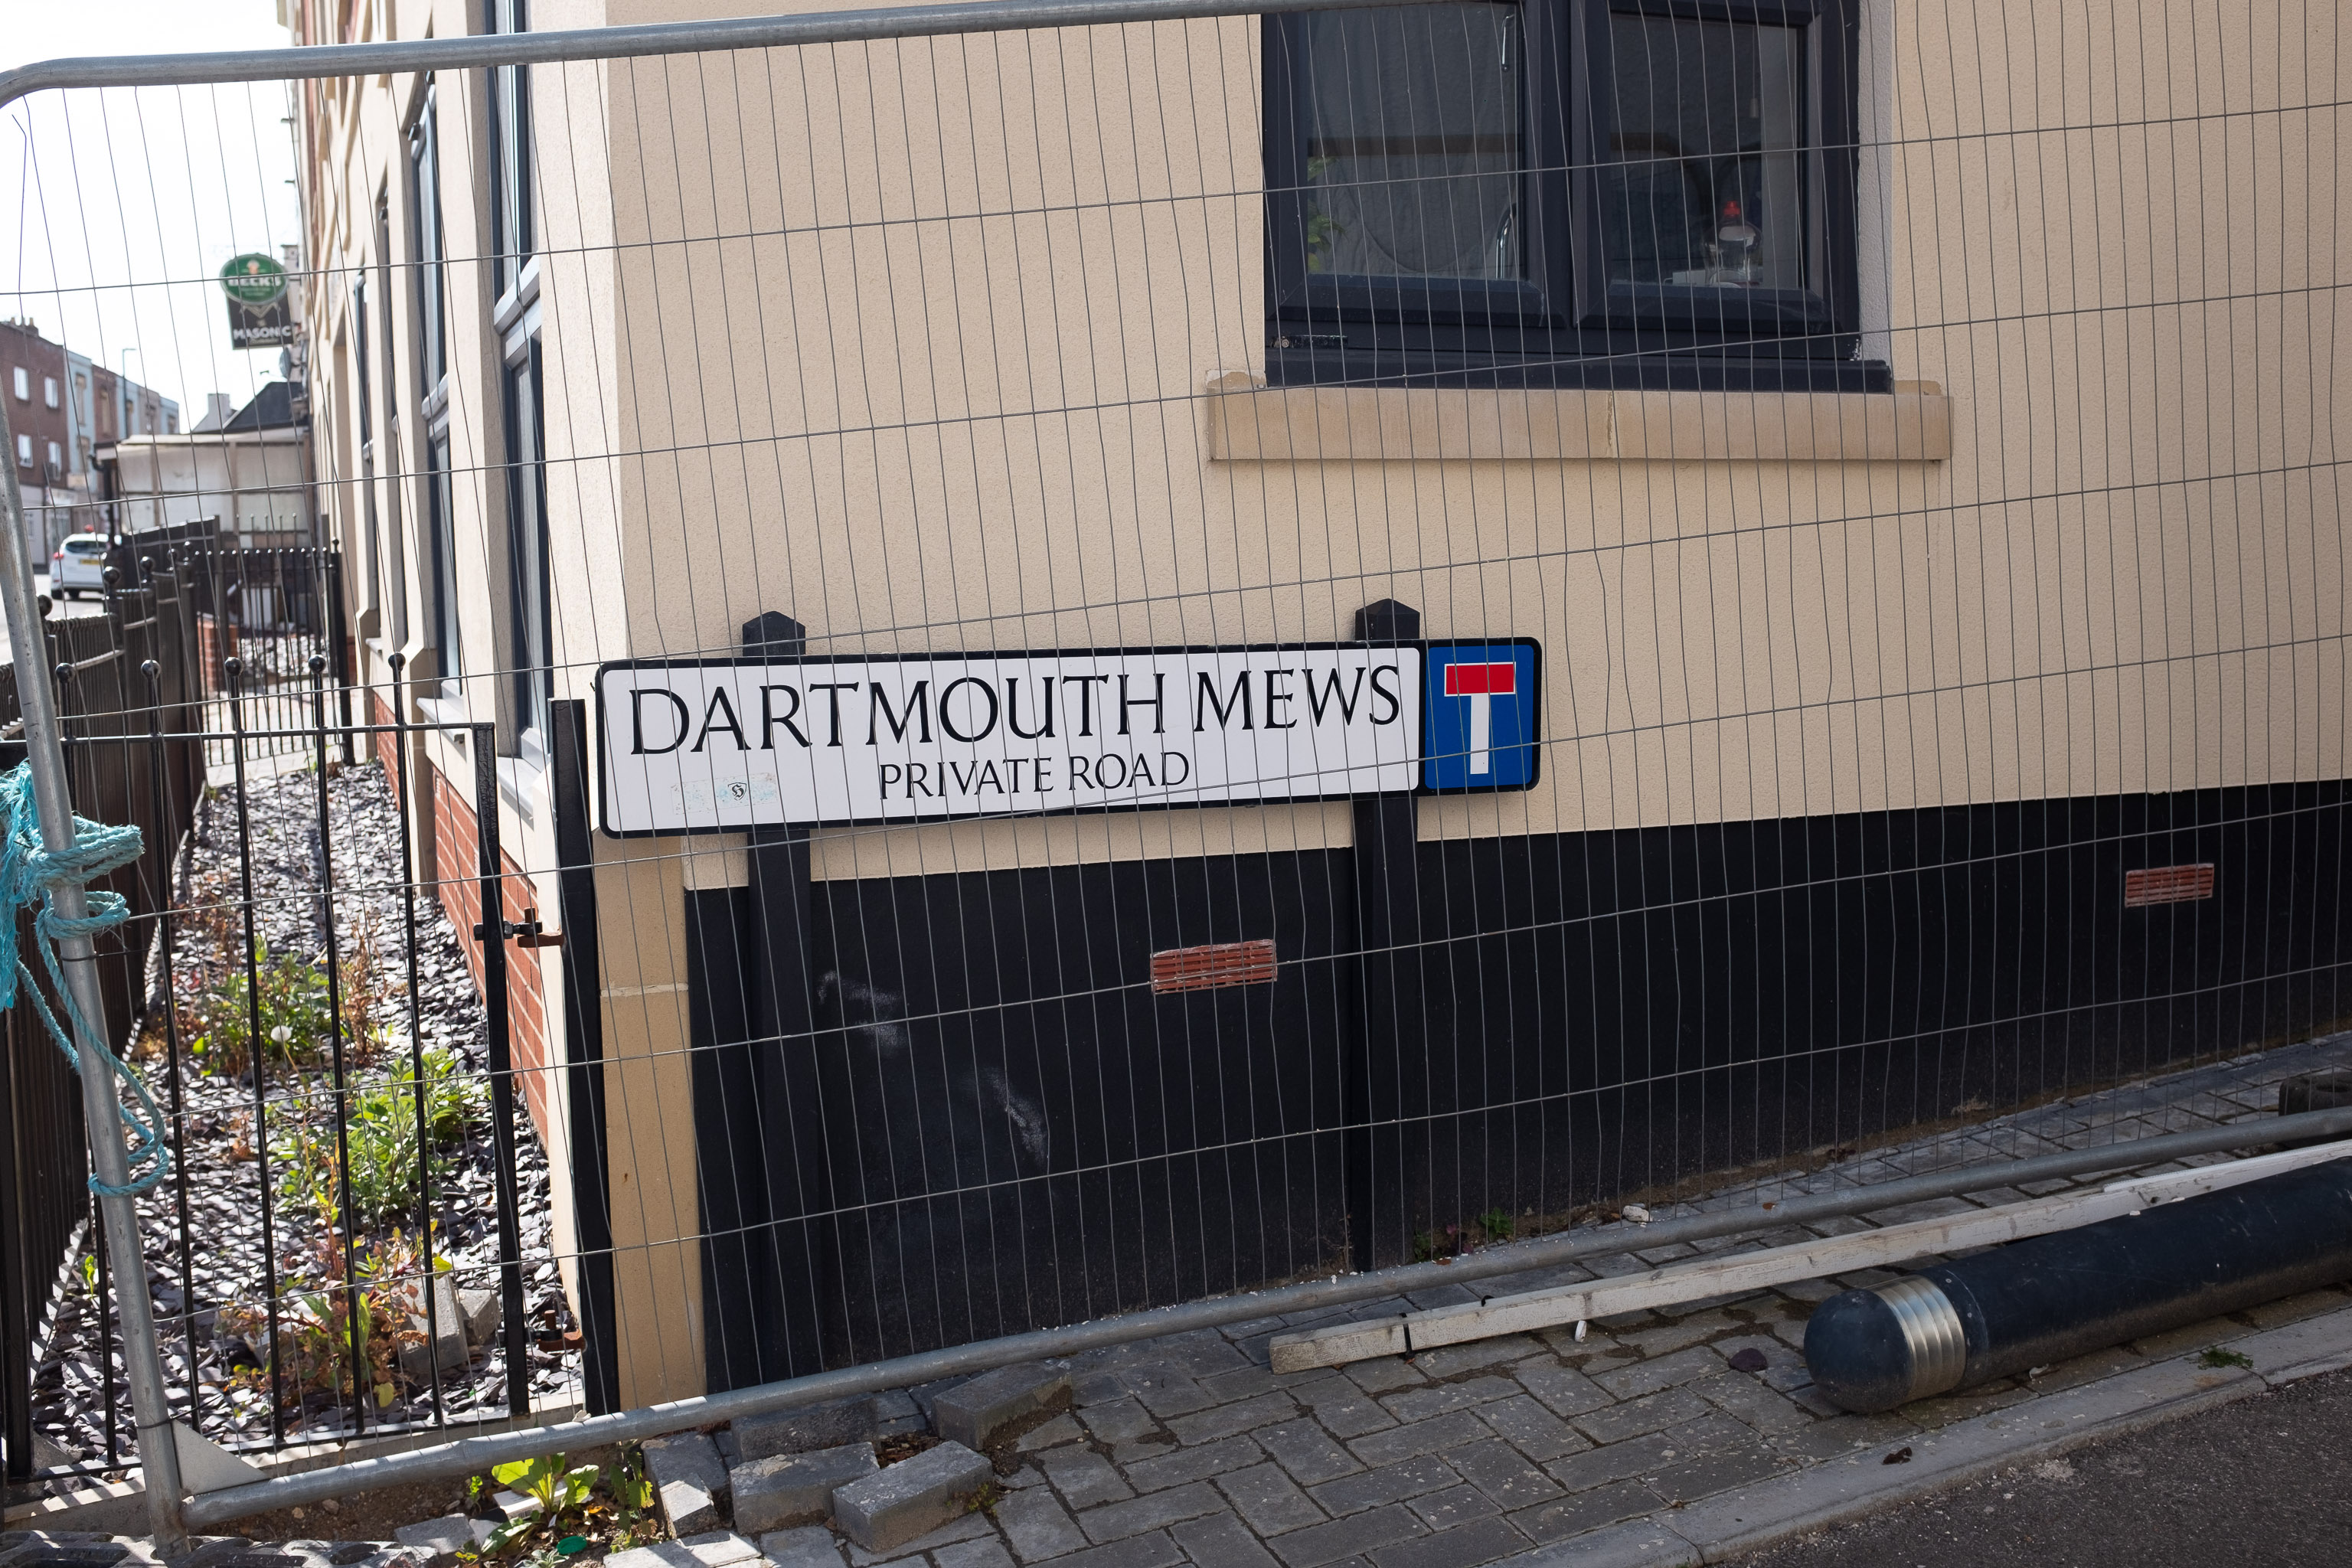 Dartmouth Mews
